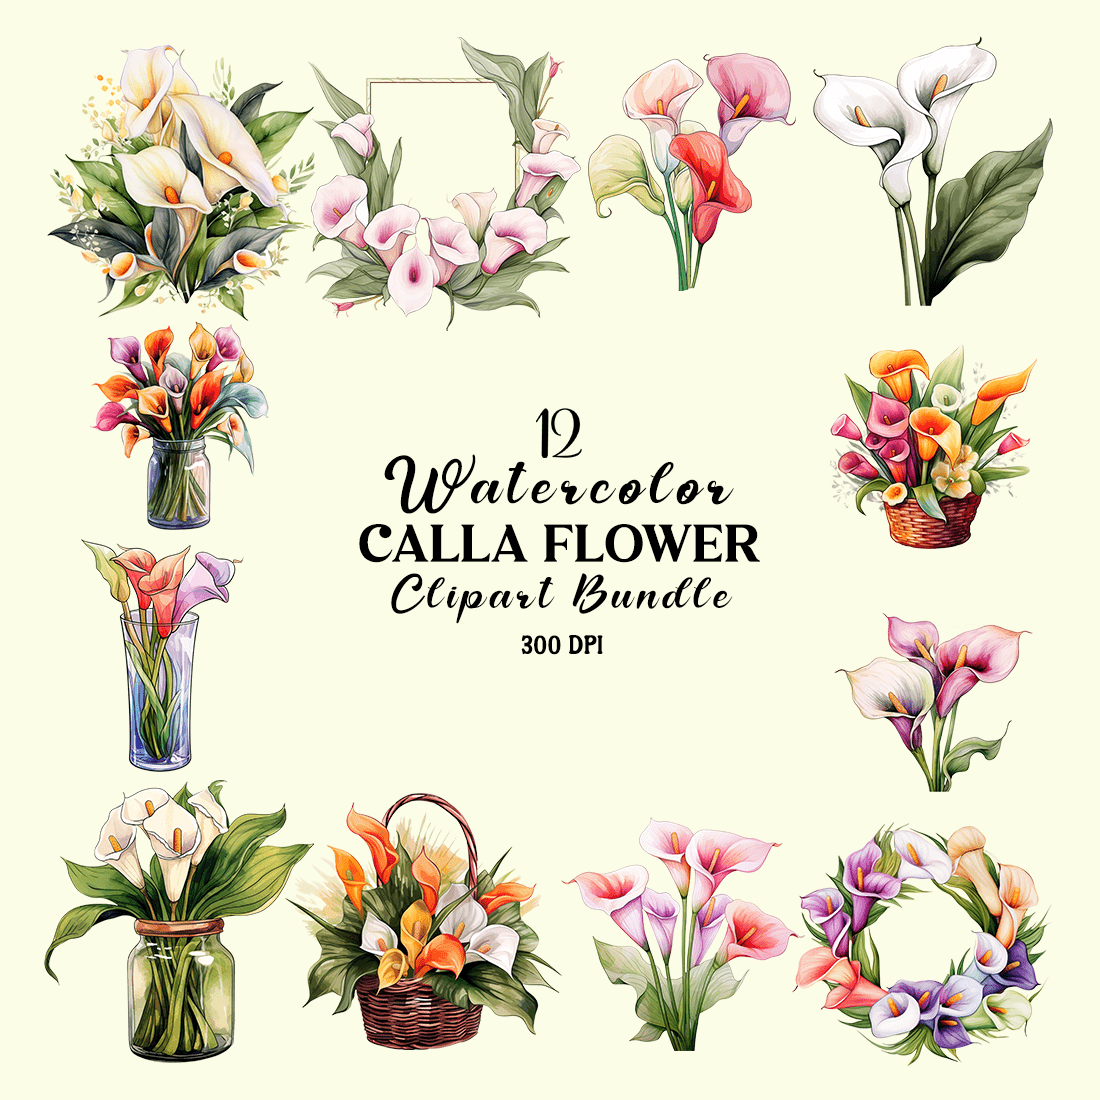 Watercolor Calla Flower Clipart Bundle cover image.